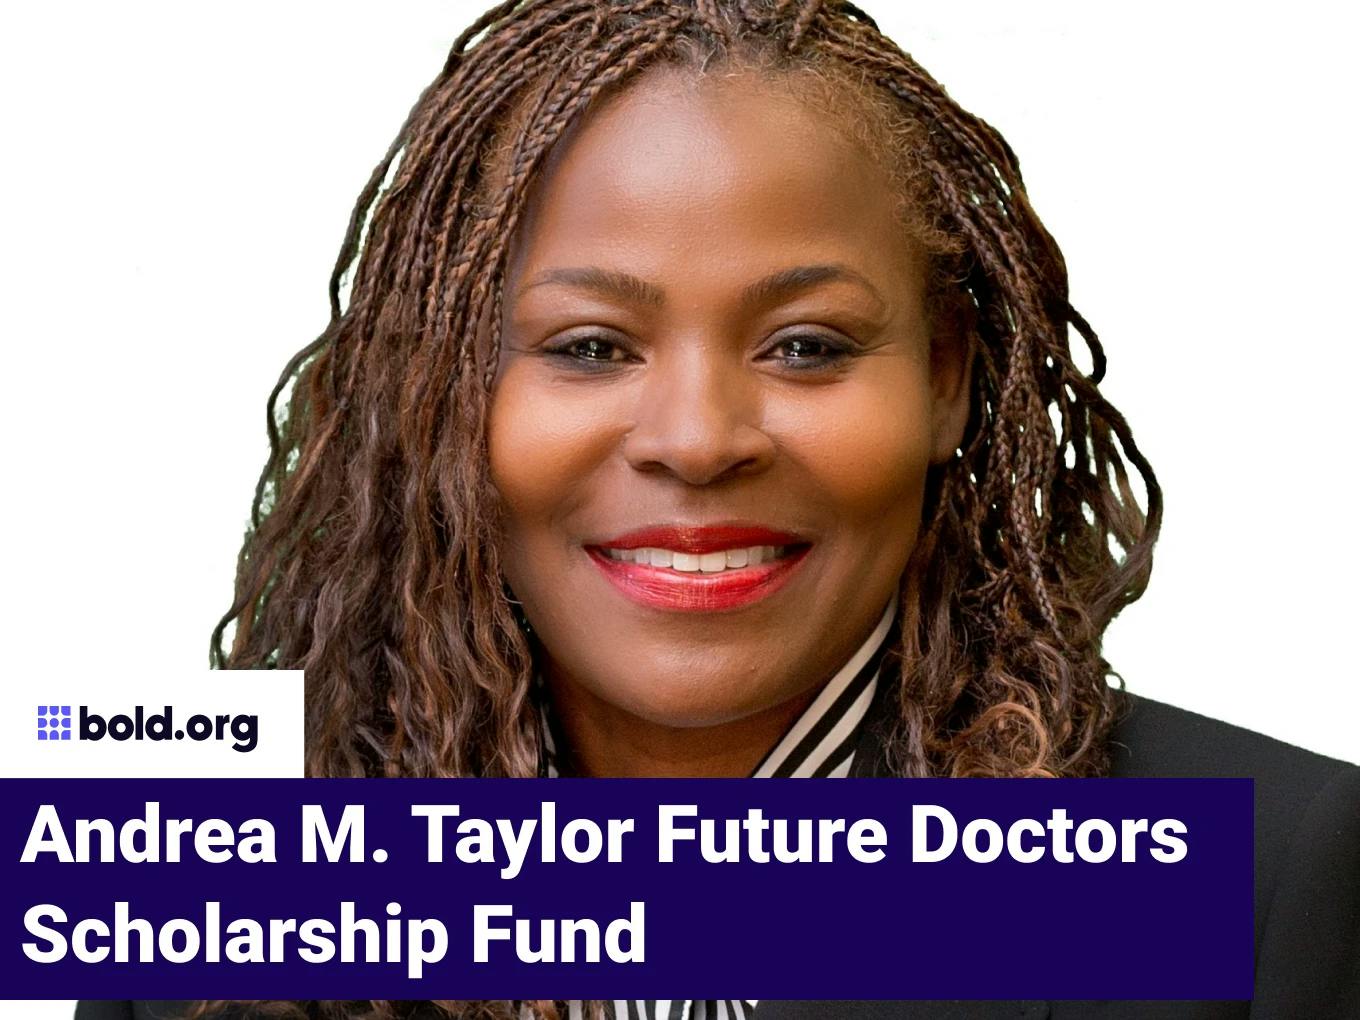 Andrea M. Taylor Future Doctors Scholarship Fund